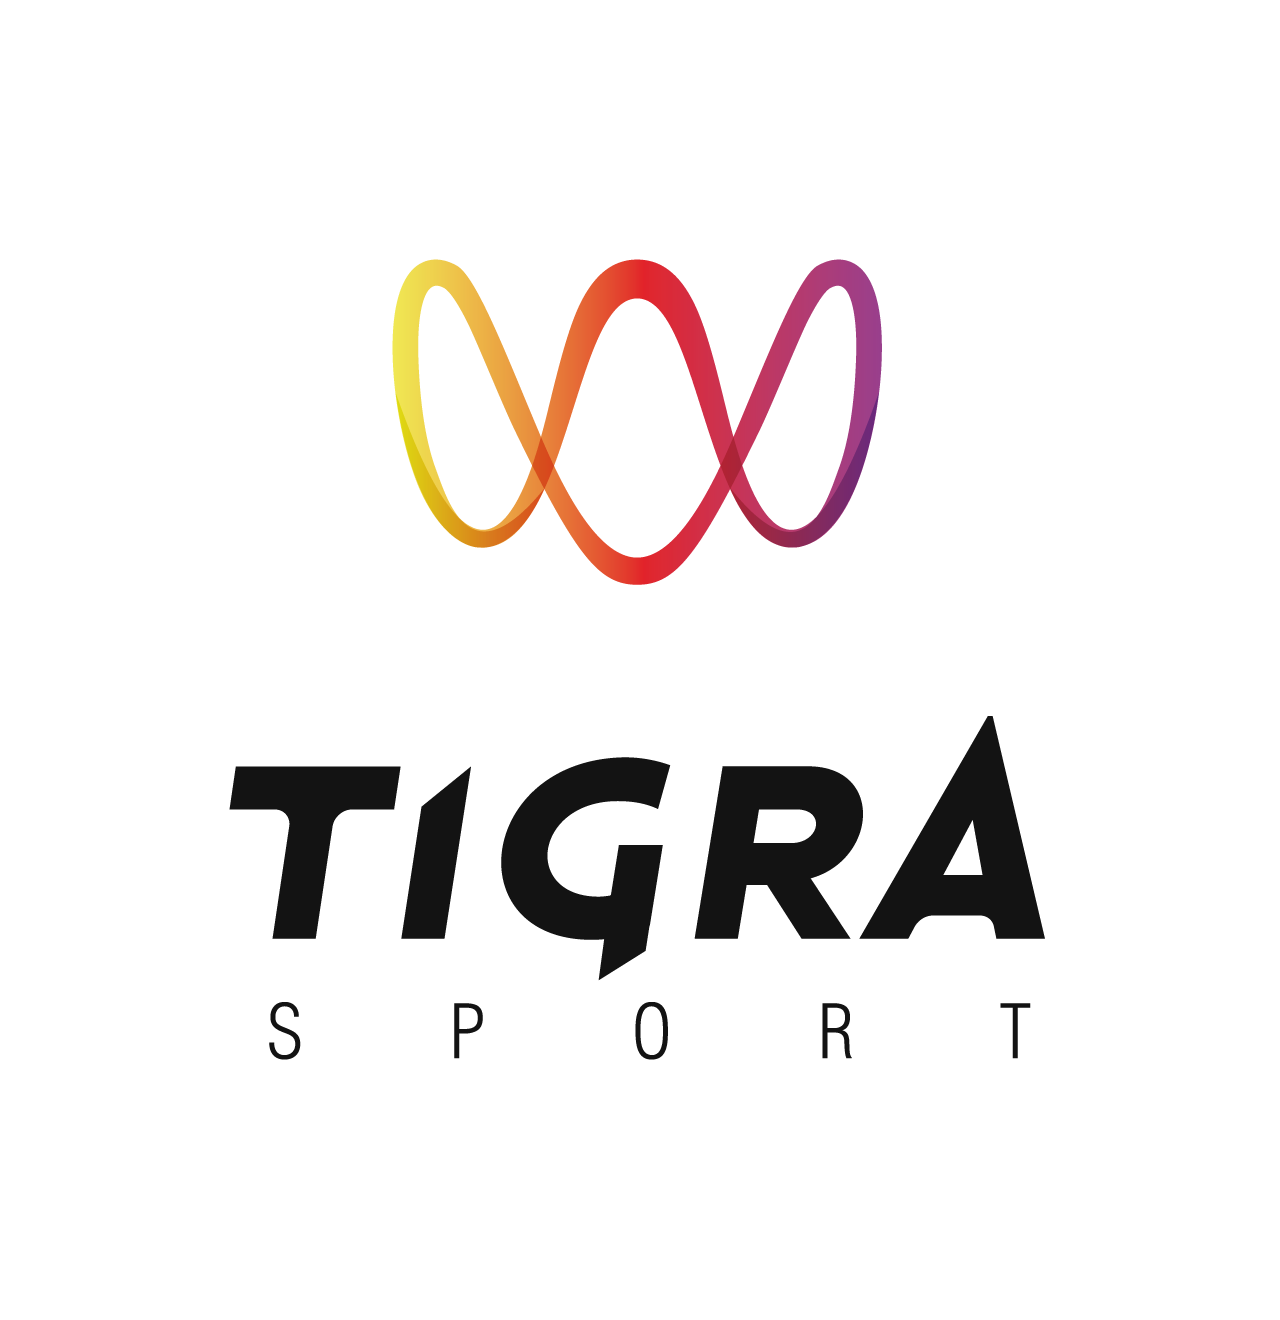 Tigra sport - exclusive distributor